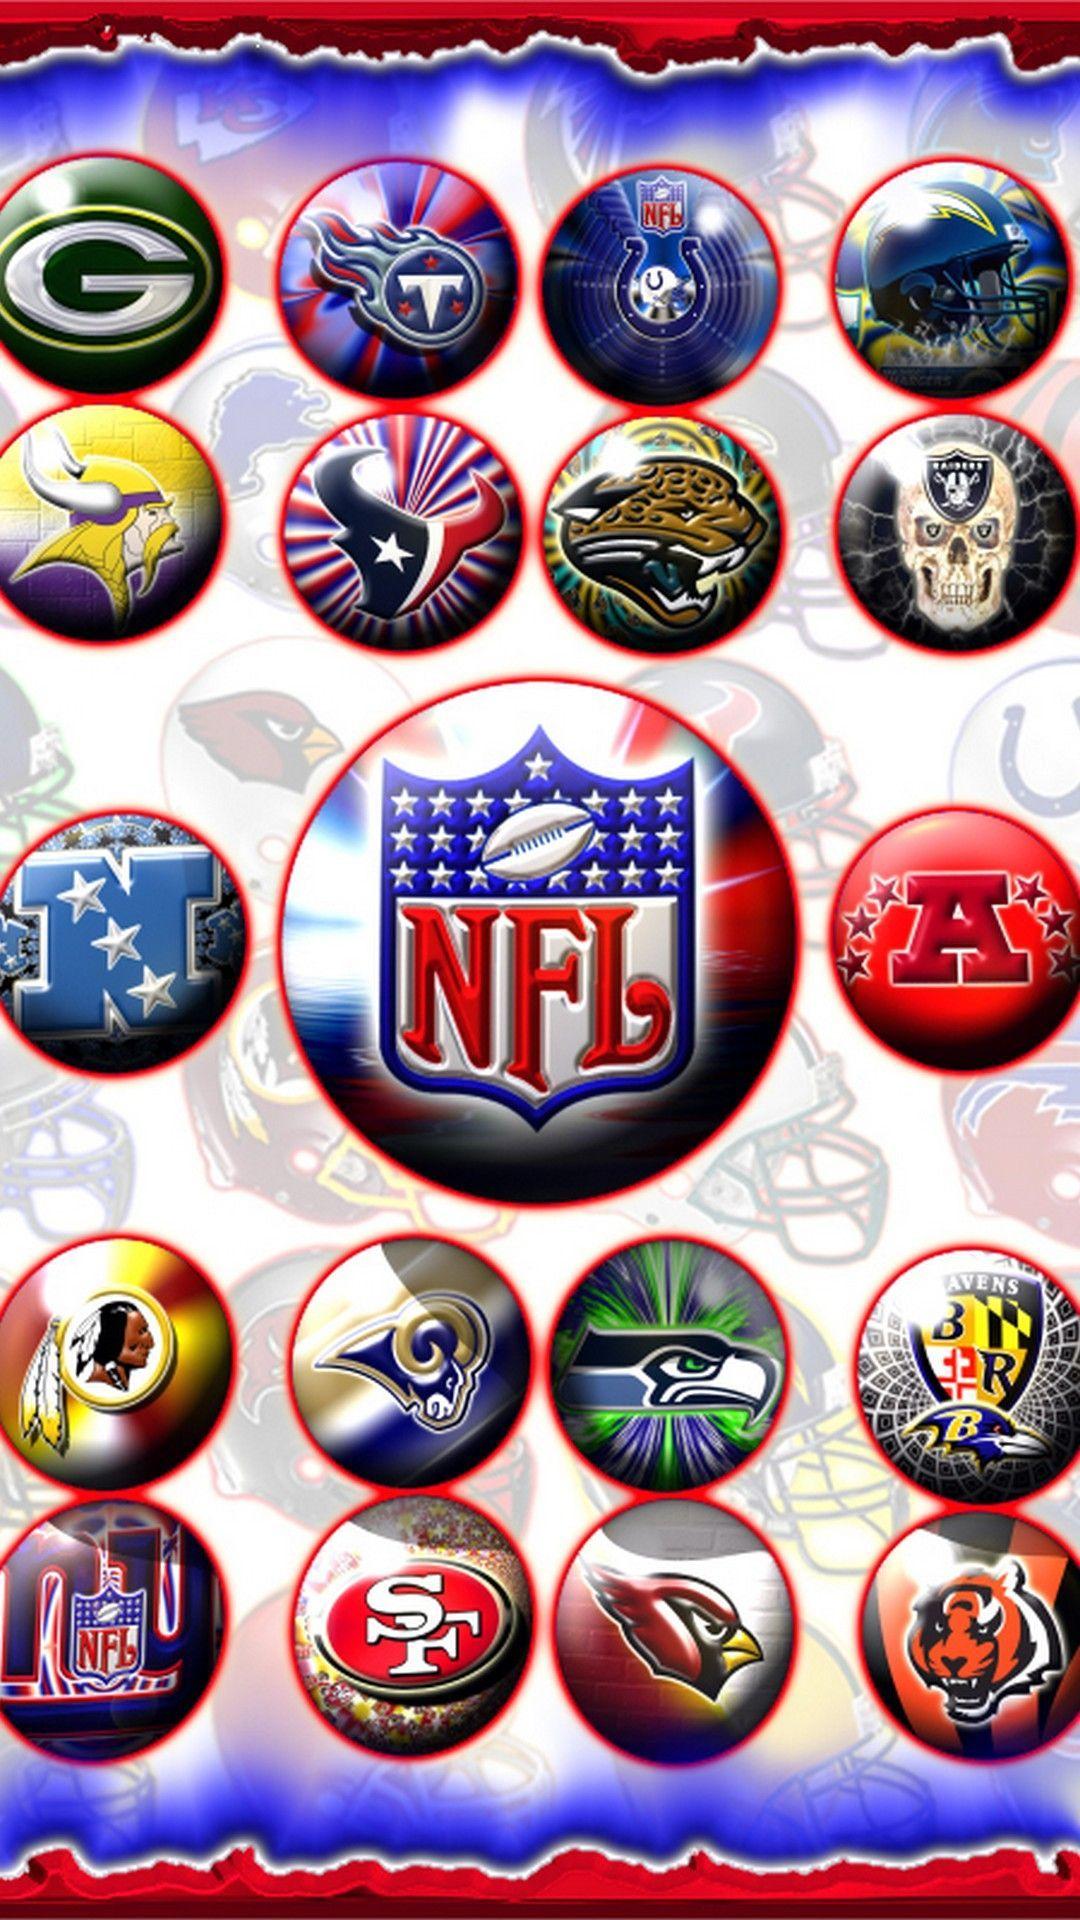 NFL iPhone Wallpaper. Football wallpaper, iPhone wallpaper